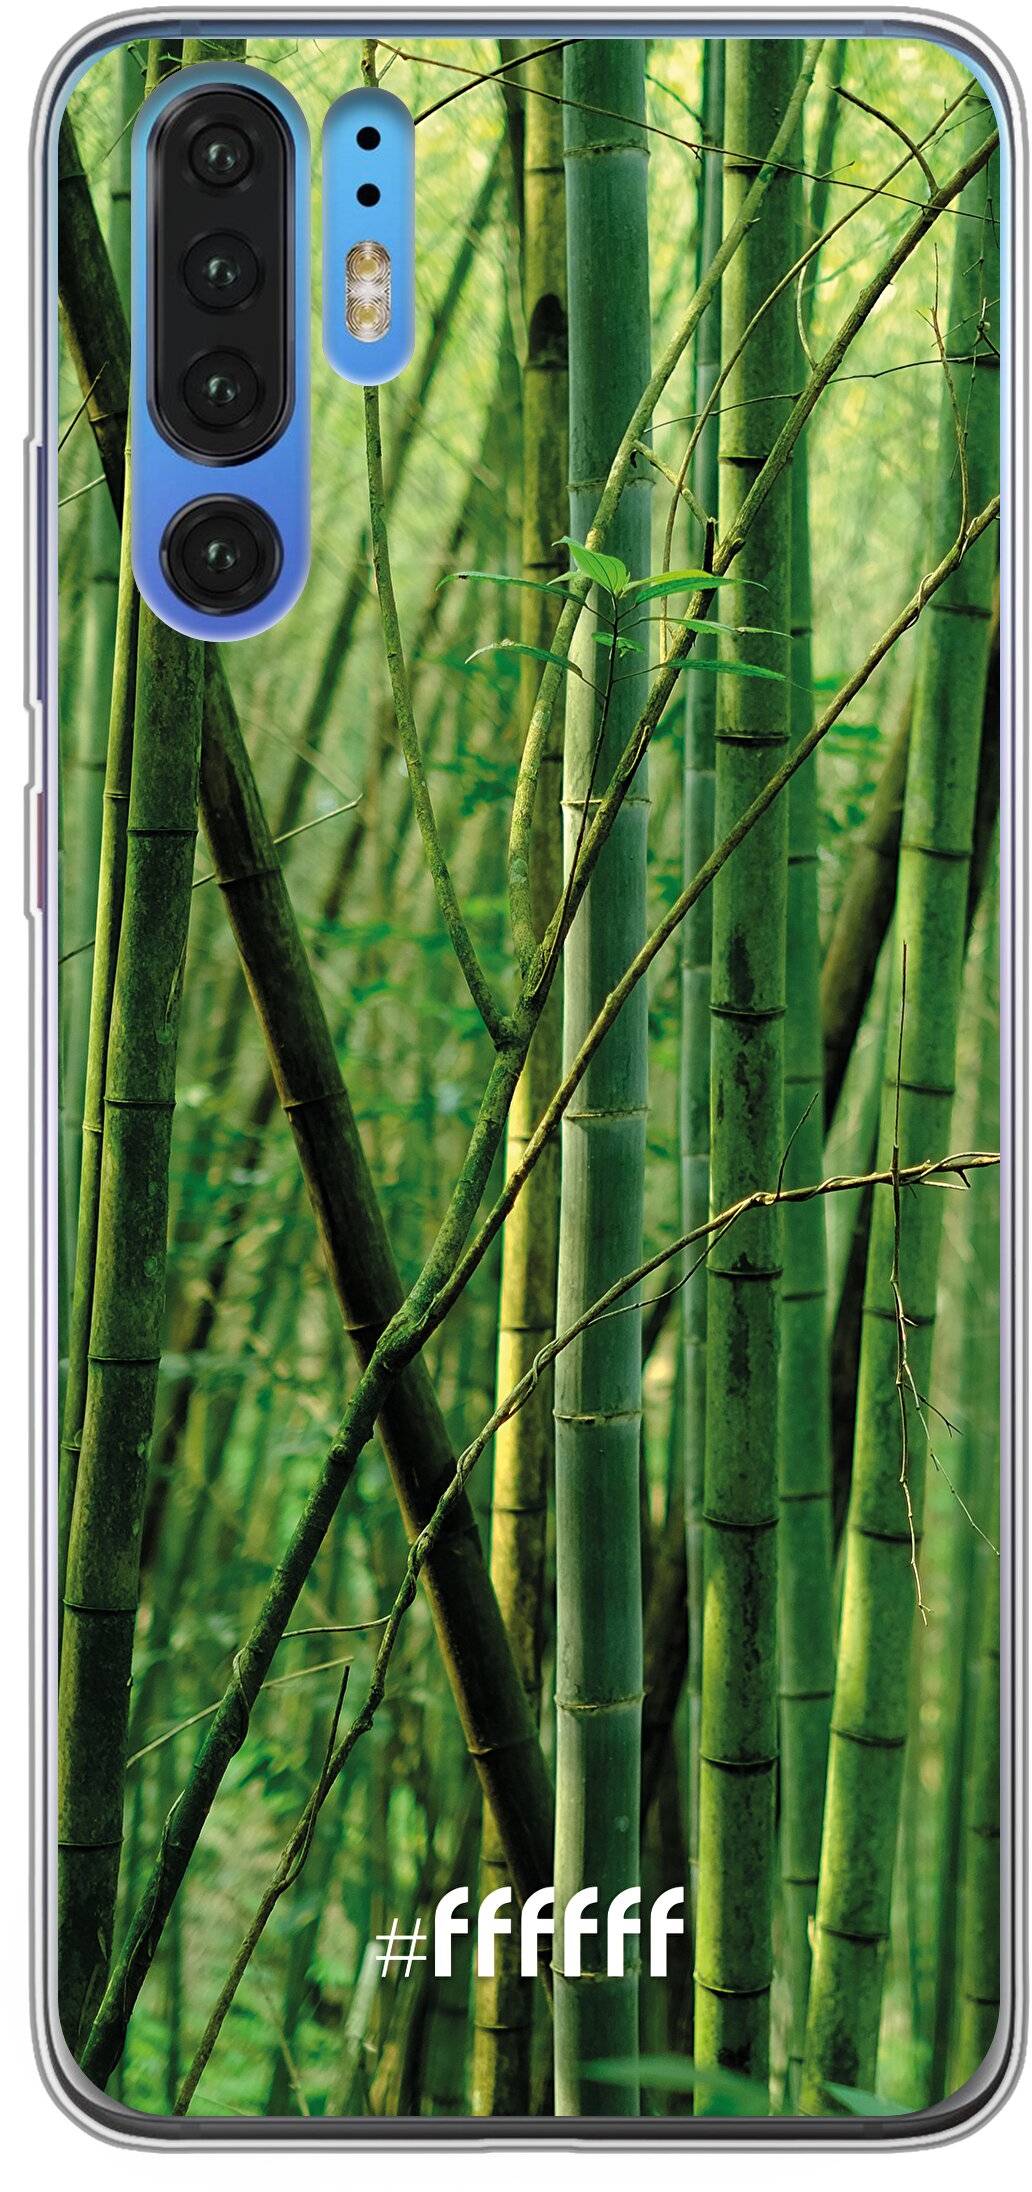 Bamboo P30 Pro